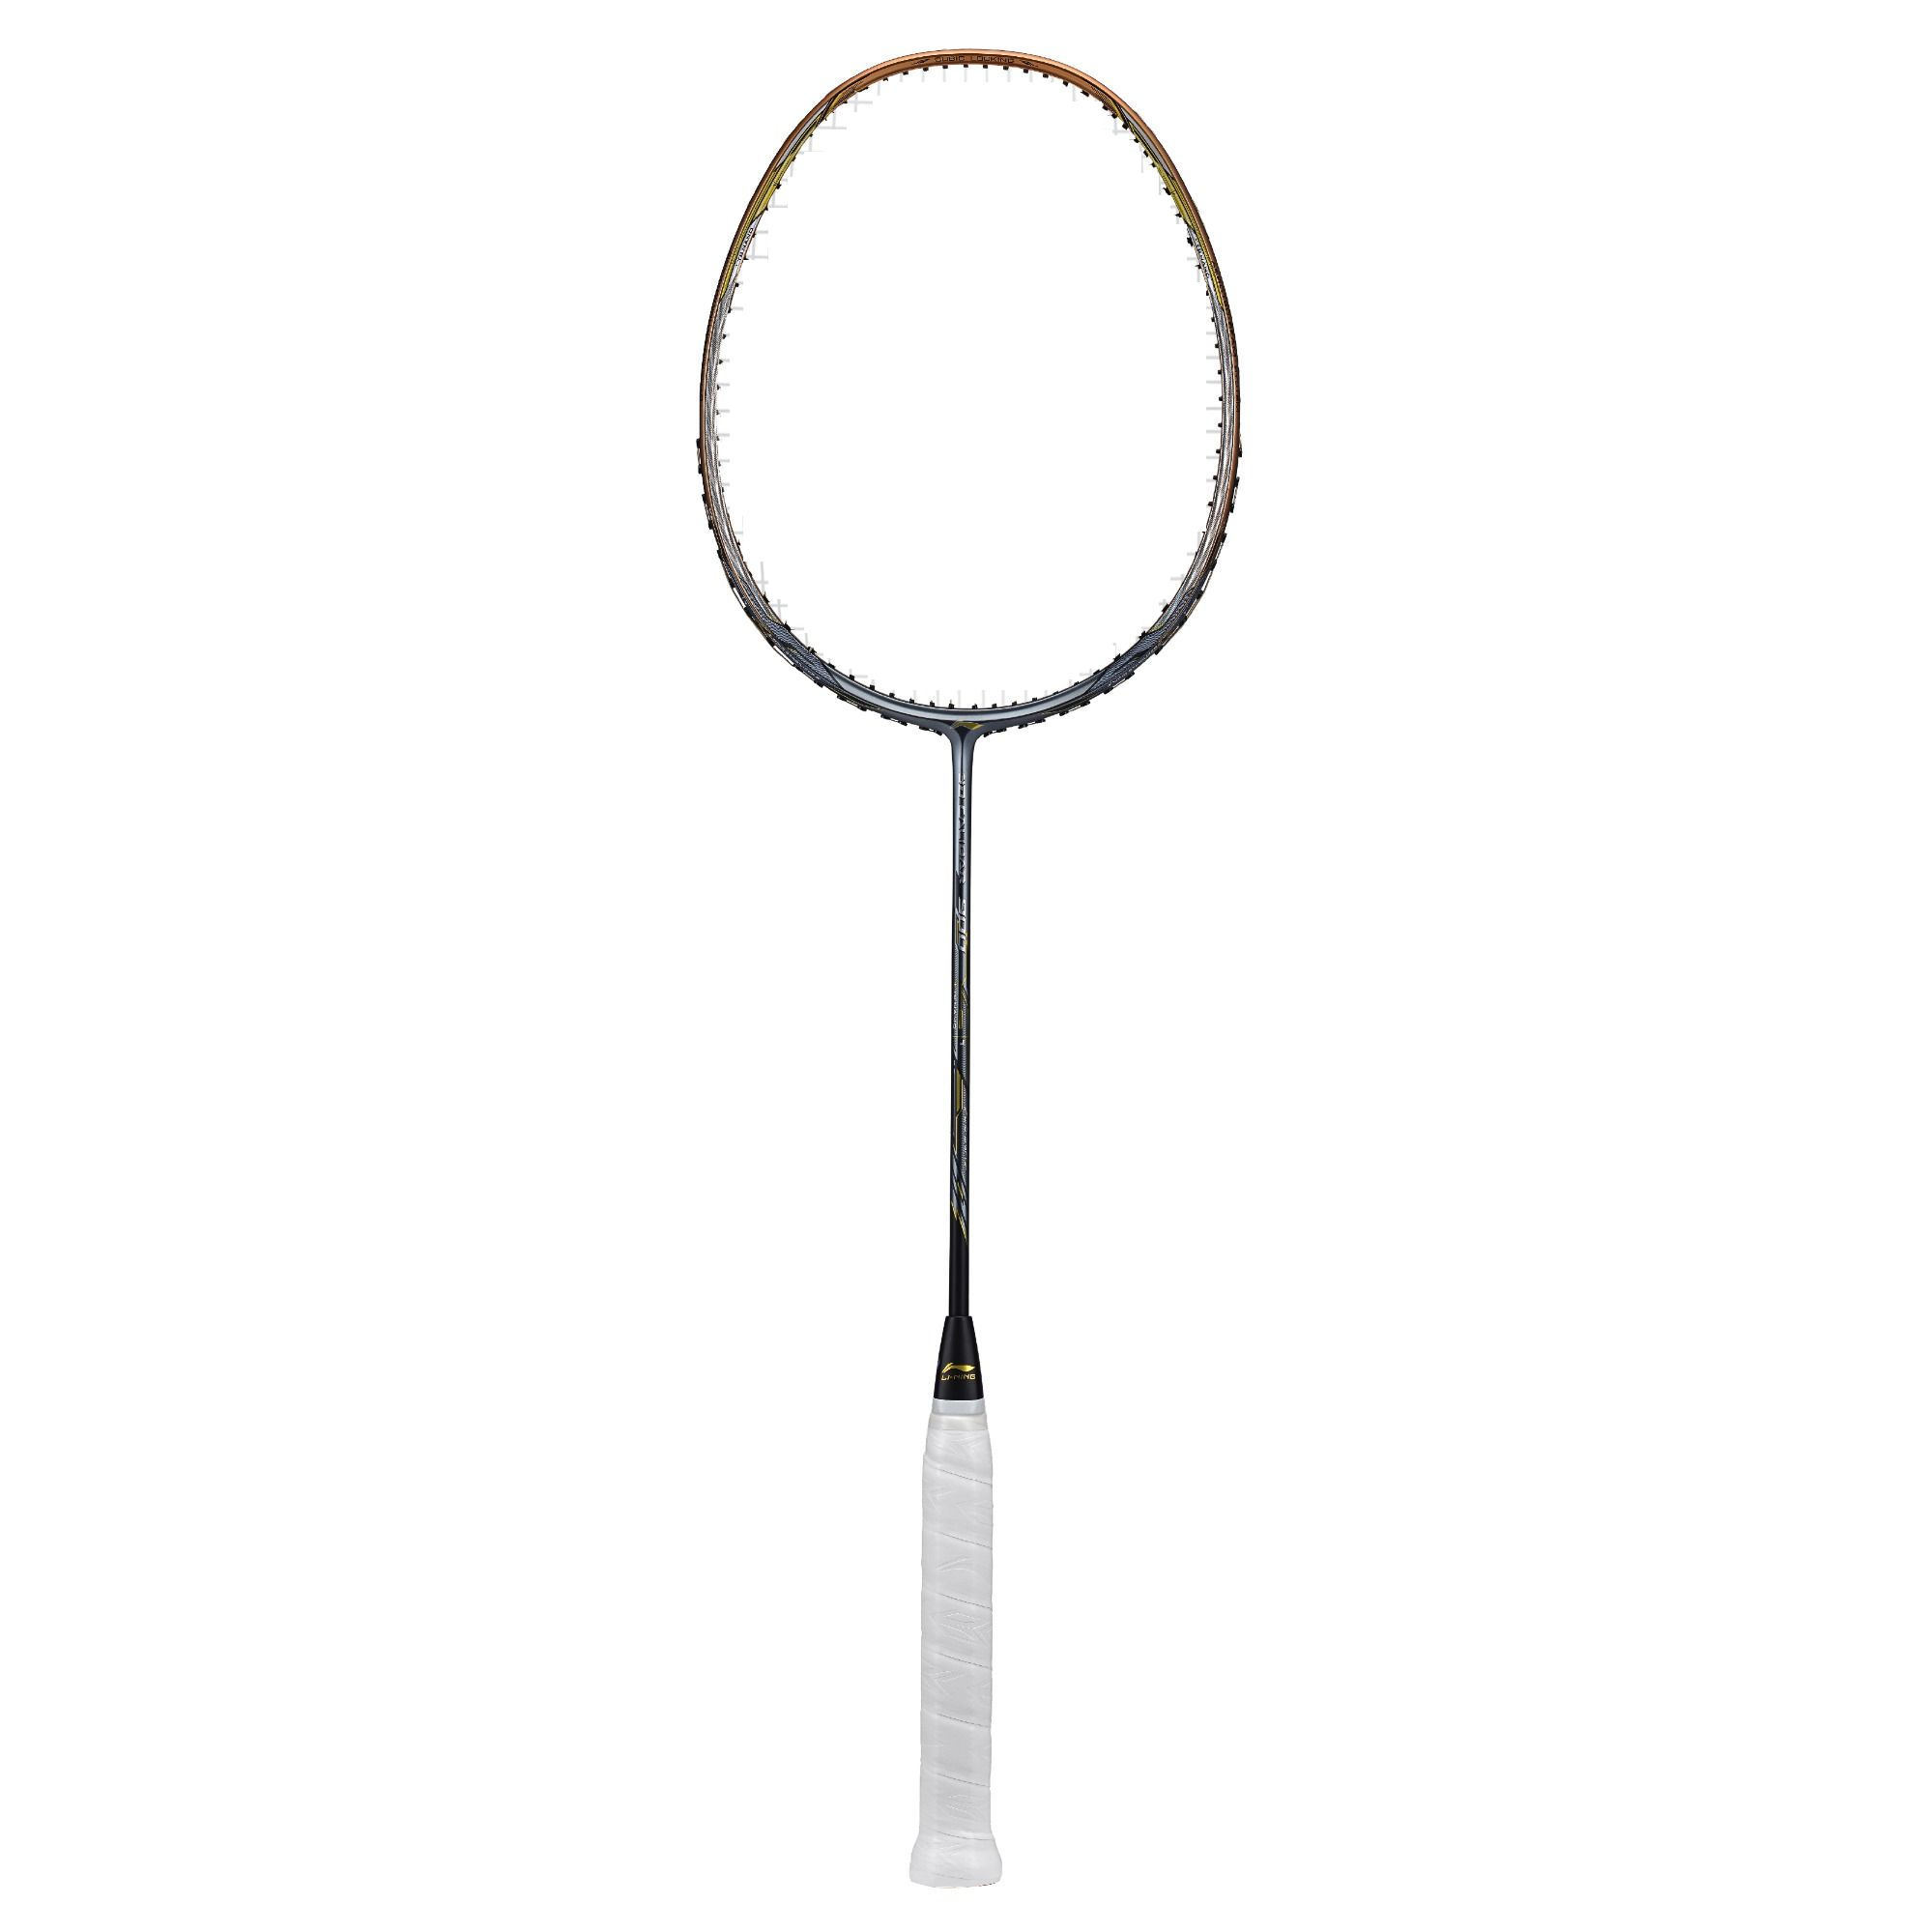 Racquets, Calibre Sports Australia (Sell Internationally Since 1996)